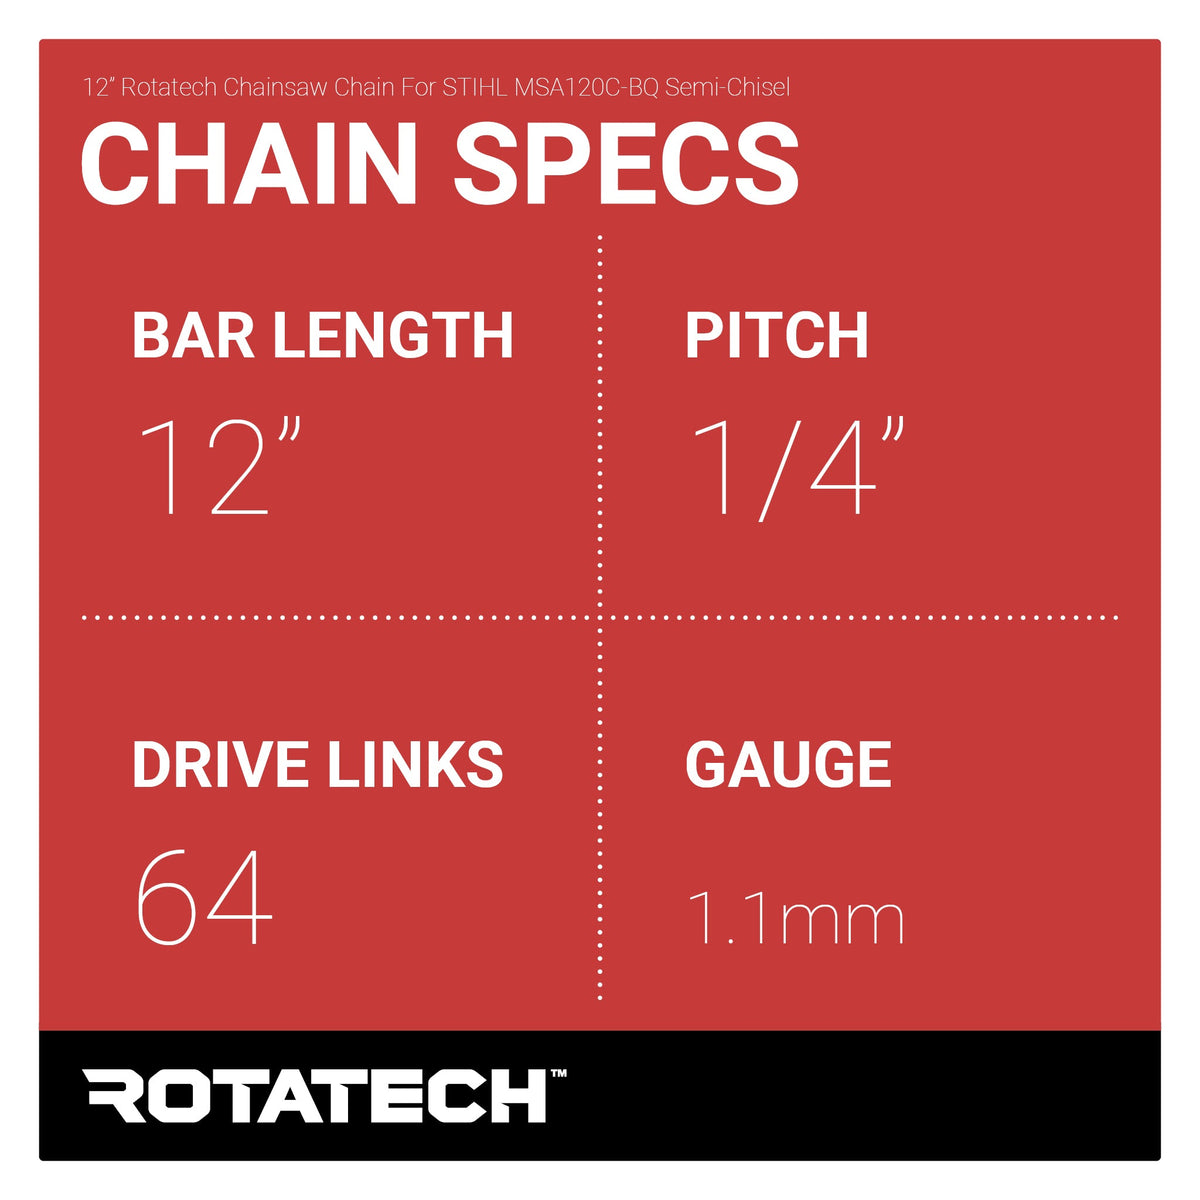 12" Rotatech Chainsaw Chain For STIHL MSA120C-BQ Semi-Chisel Chain Specs